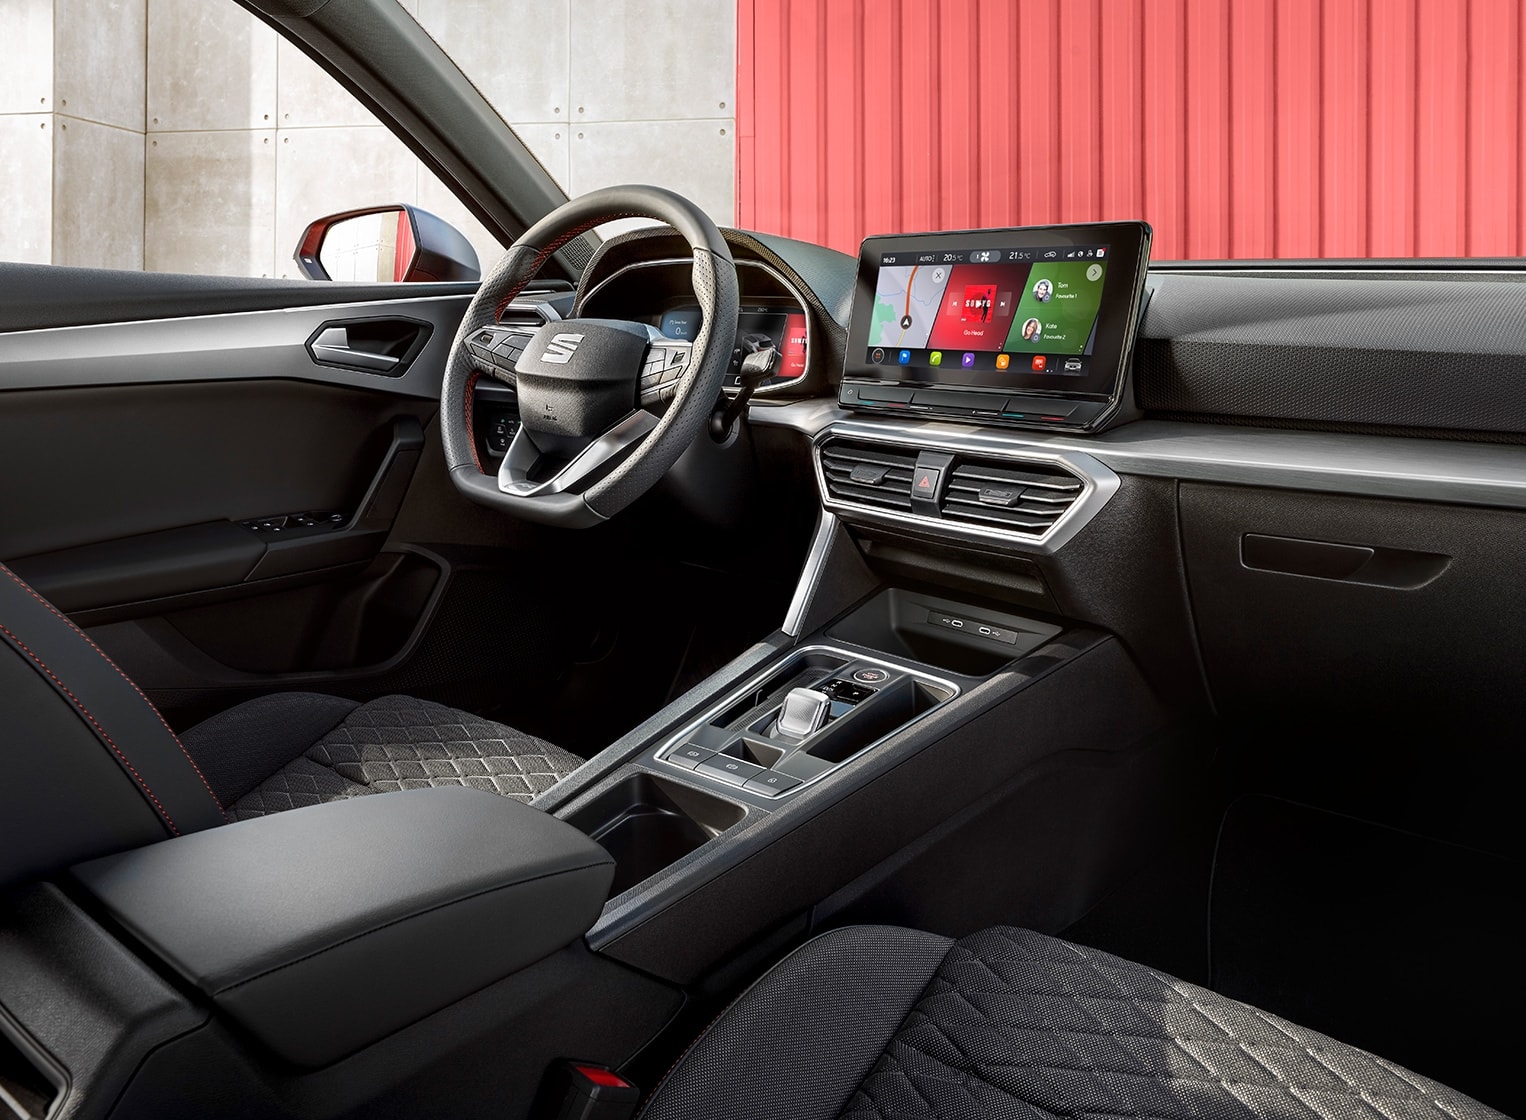 Nuova SEAT Leon 2020 - Tecnologia e comfort